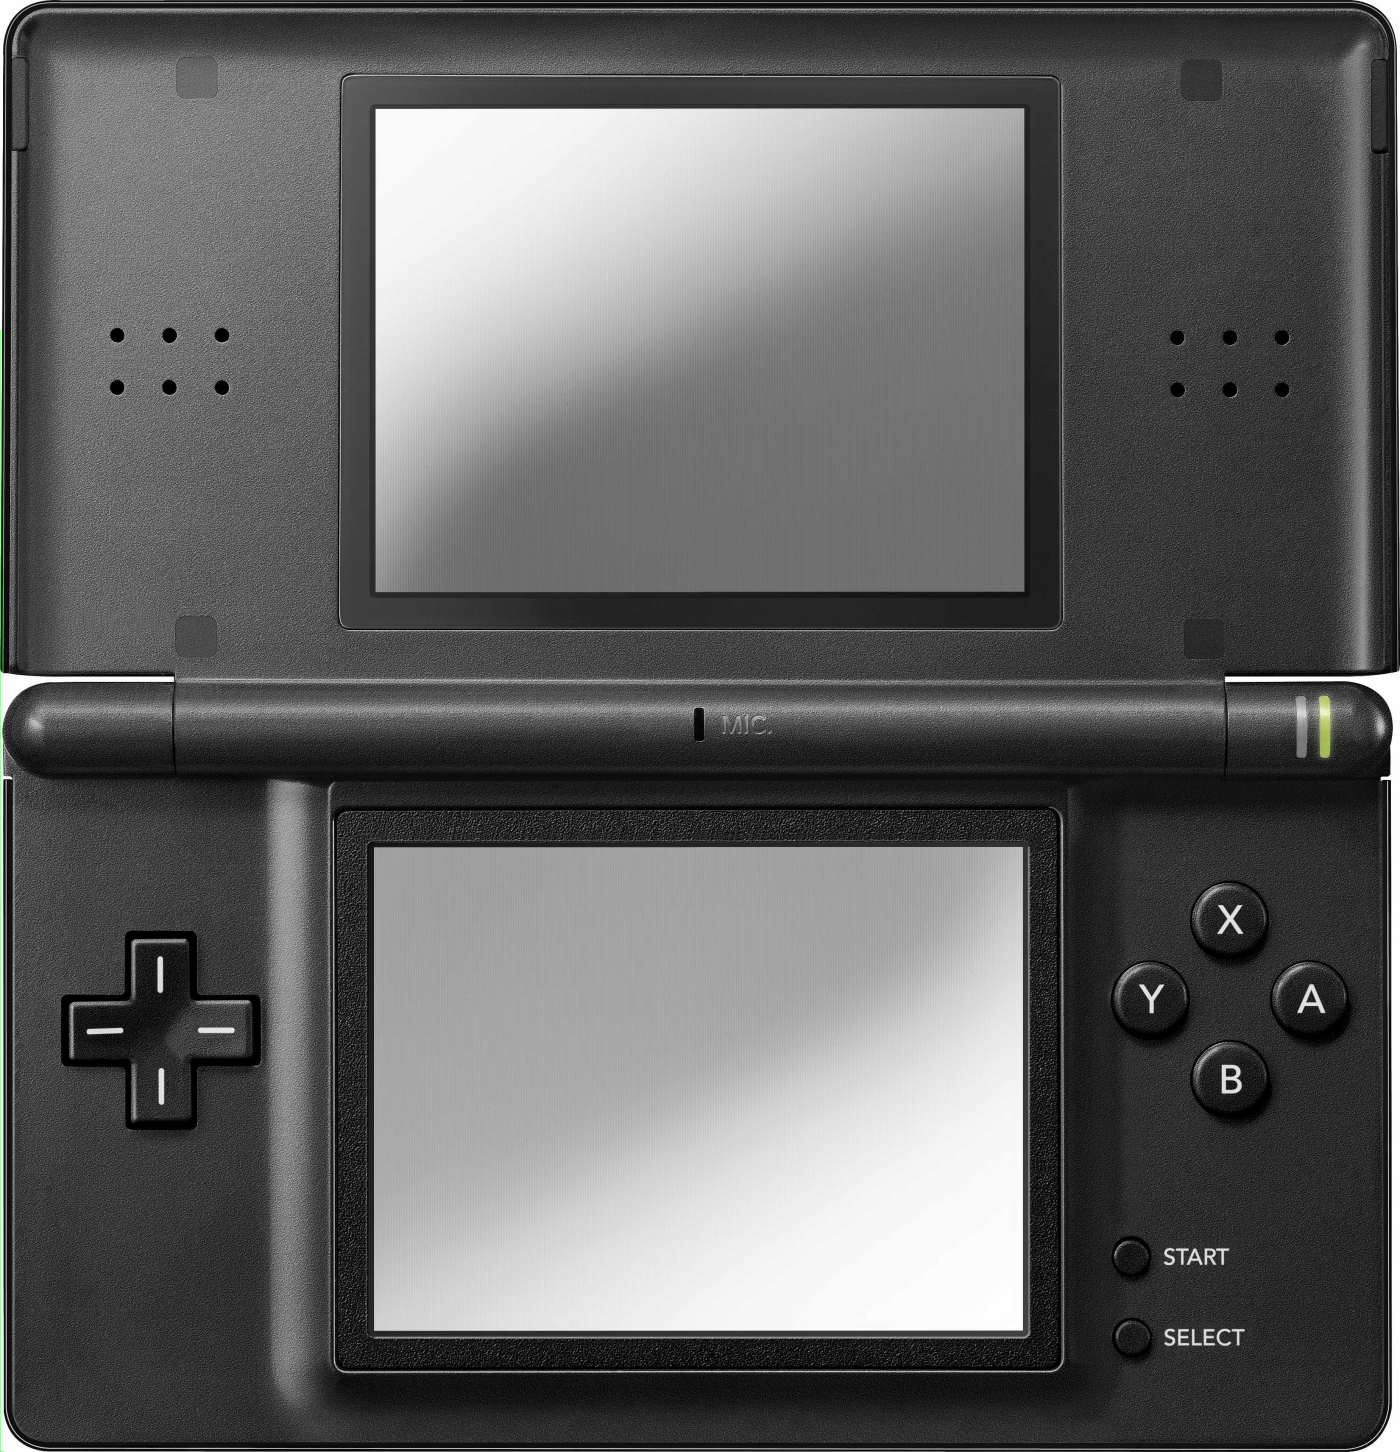 Nintendo DS - Wikipedia